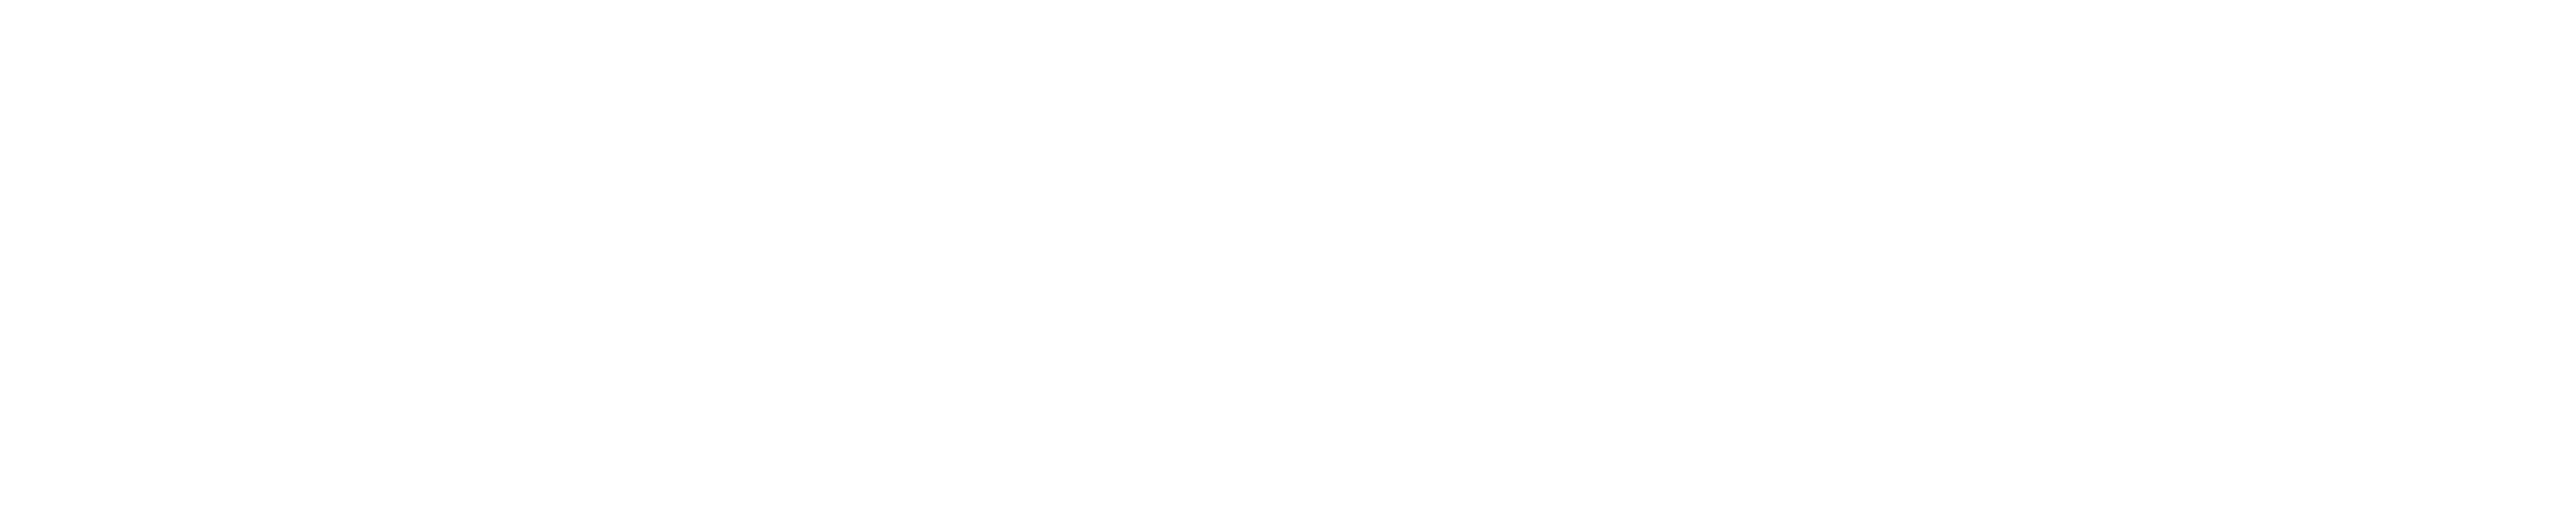 Bechard Electric logo